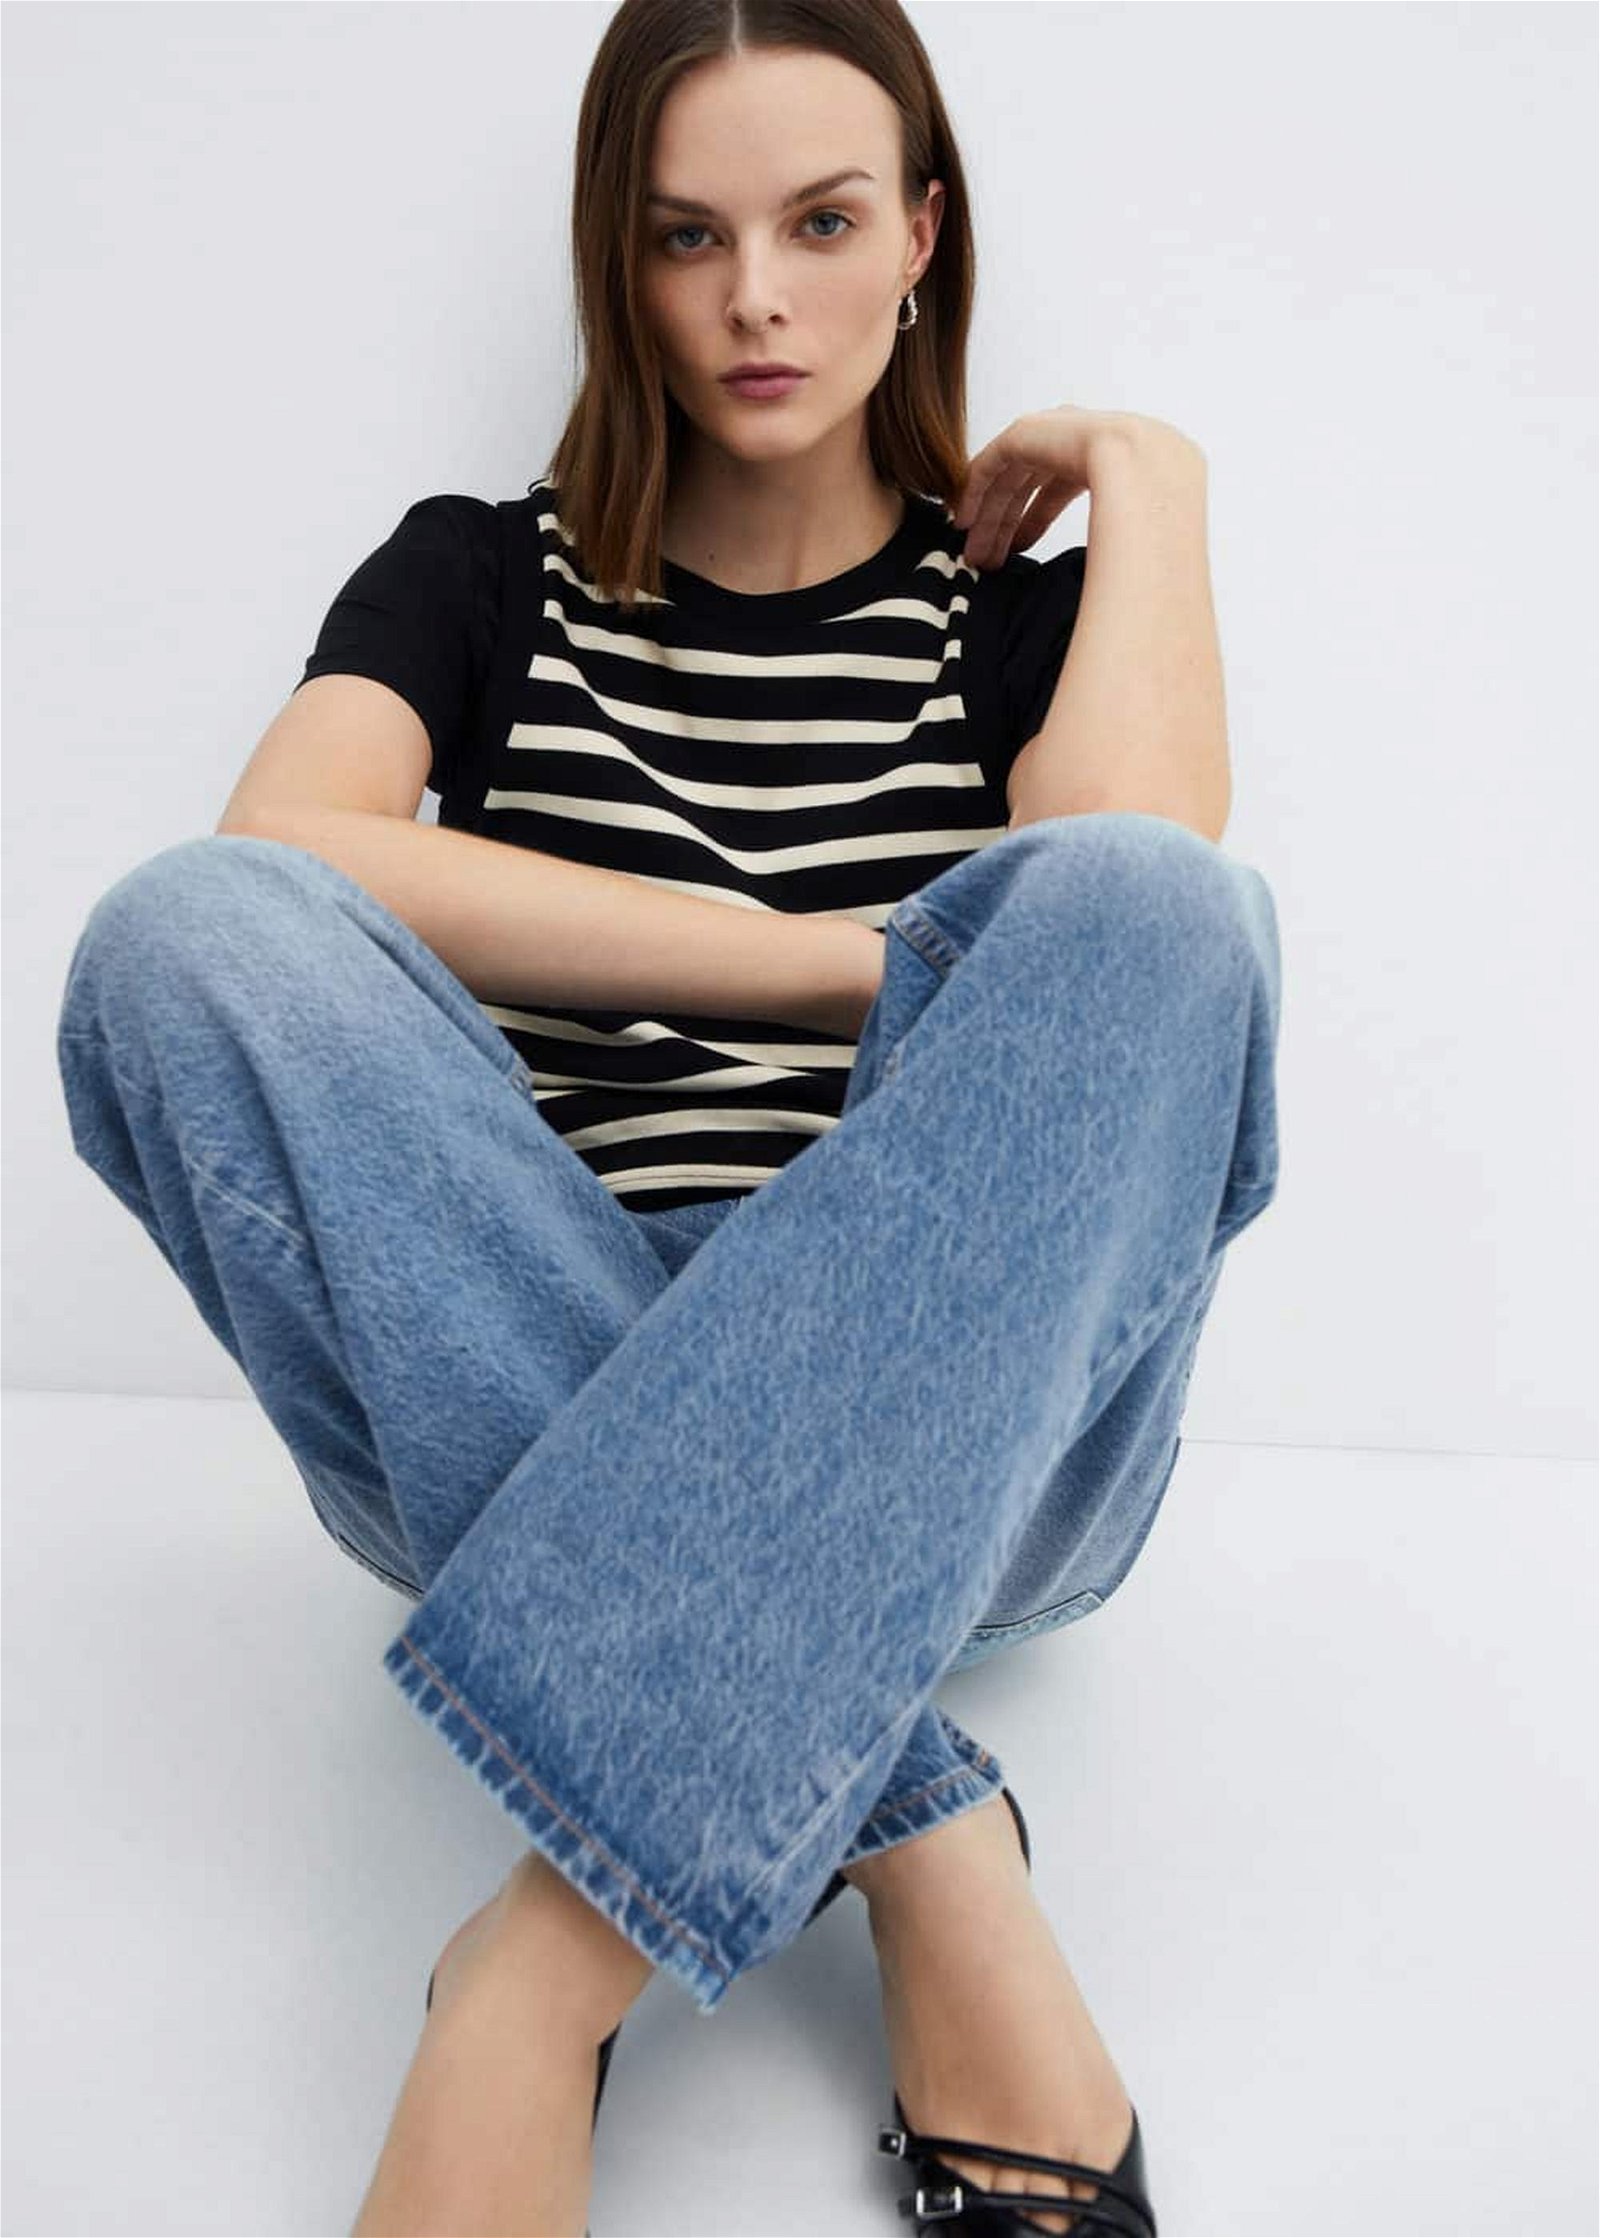 Mango Kadın Orta Bel Wideleg Jean Pantolon Orta Vintage Mavi